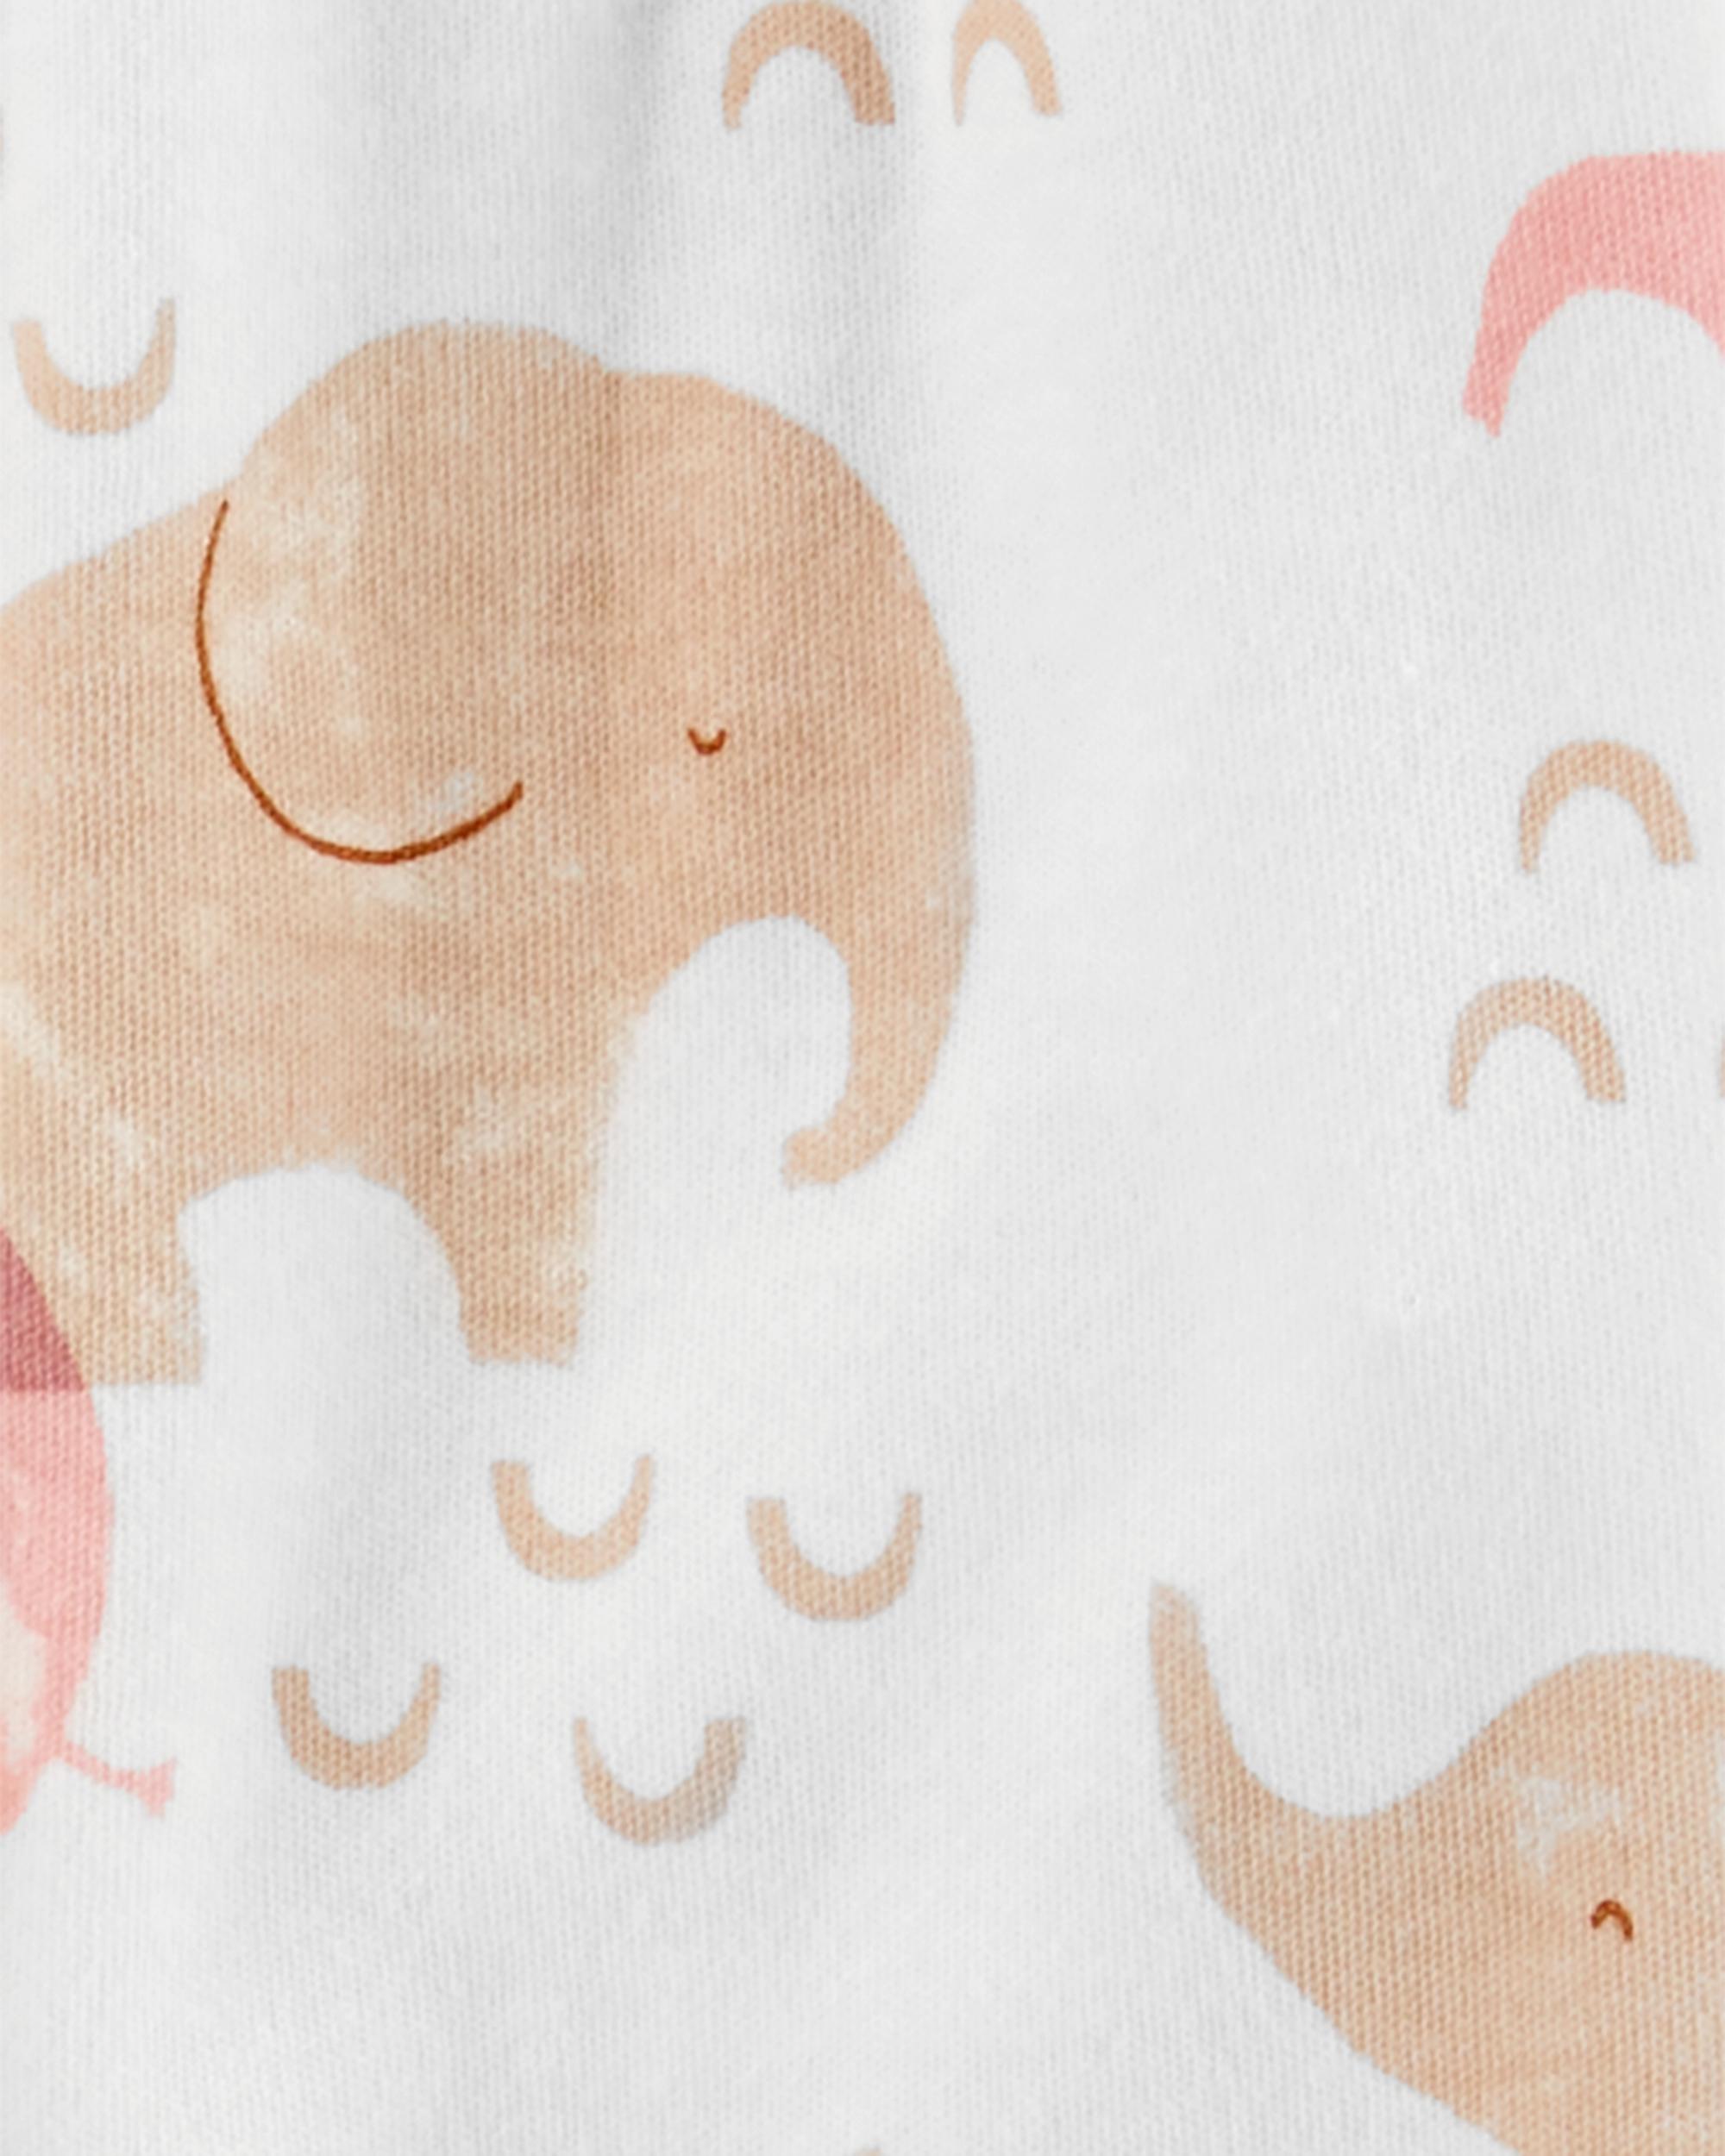 Elephant Snap-Up Cotton Sleeper Pyjamas